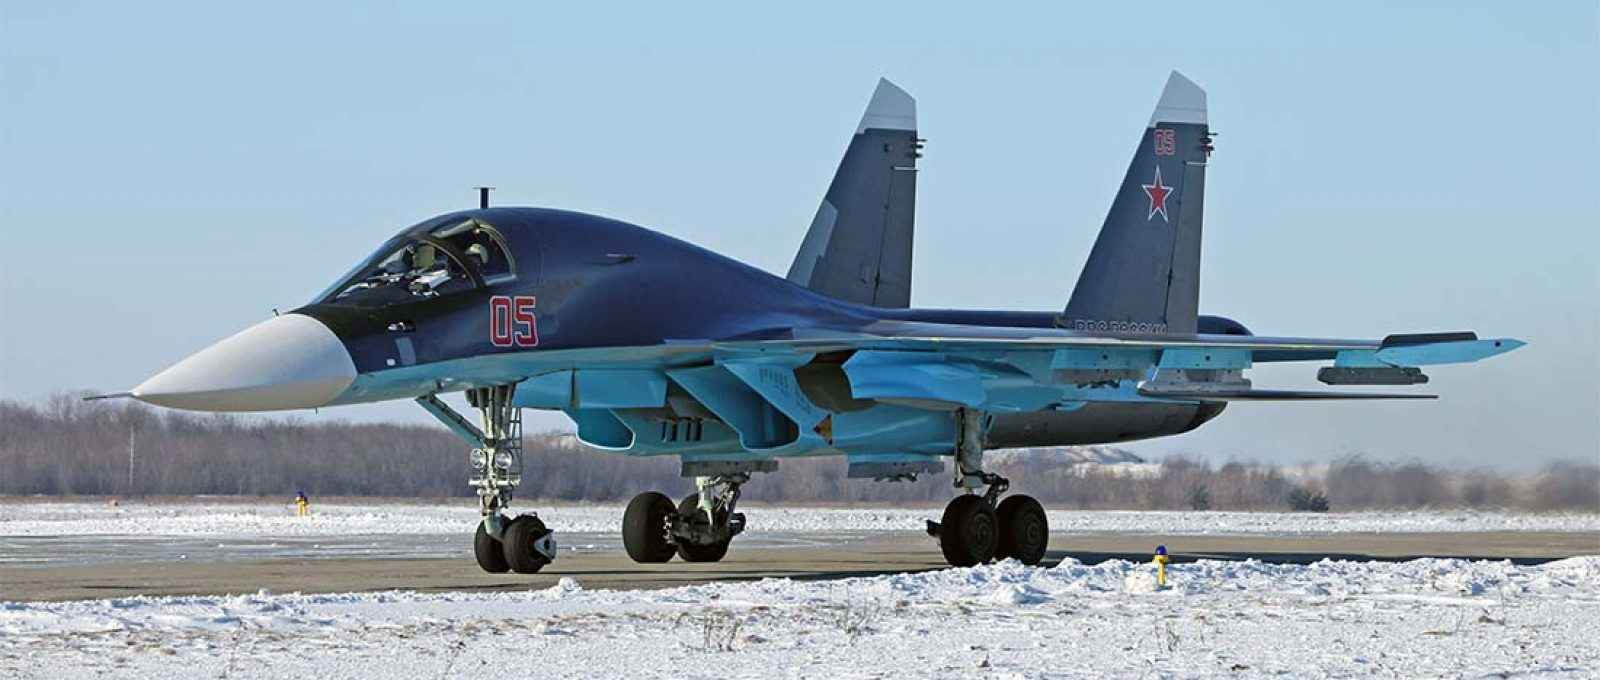 Caça Su-34 Fullback na base aérea de Lipetsk, Rússia, janeiro de 2012. (Vitaliy V. Kuzmin/Domínio Público).